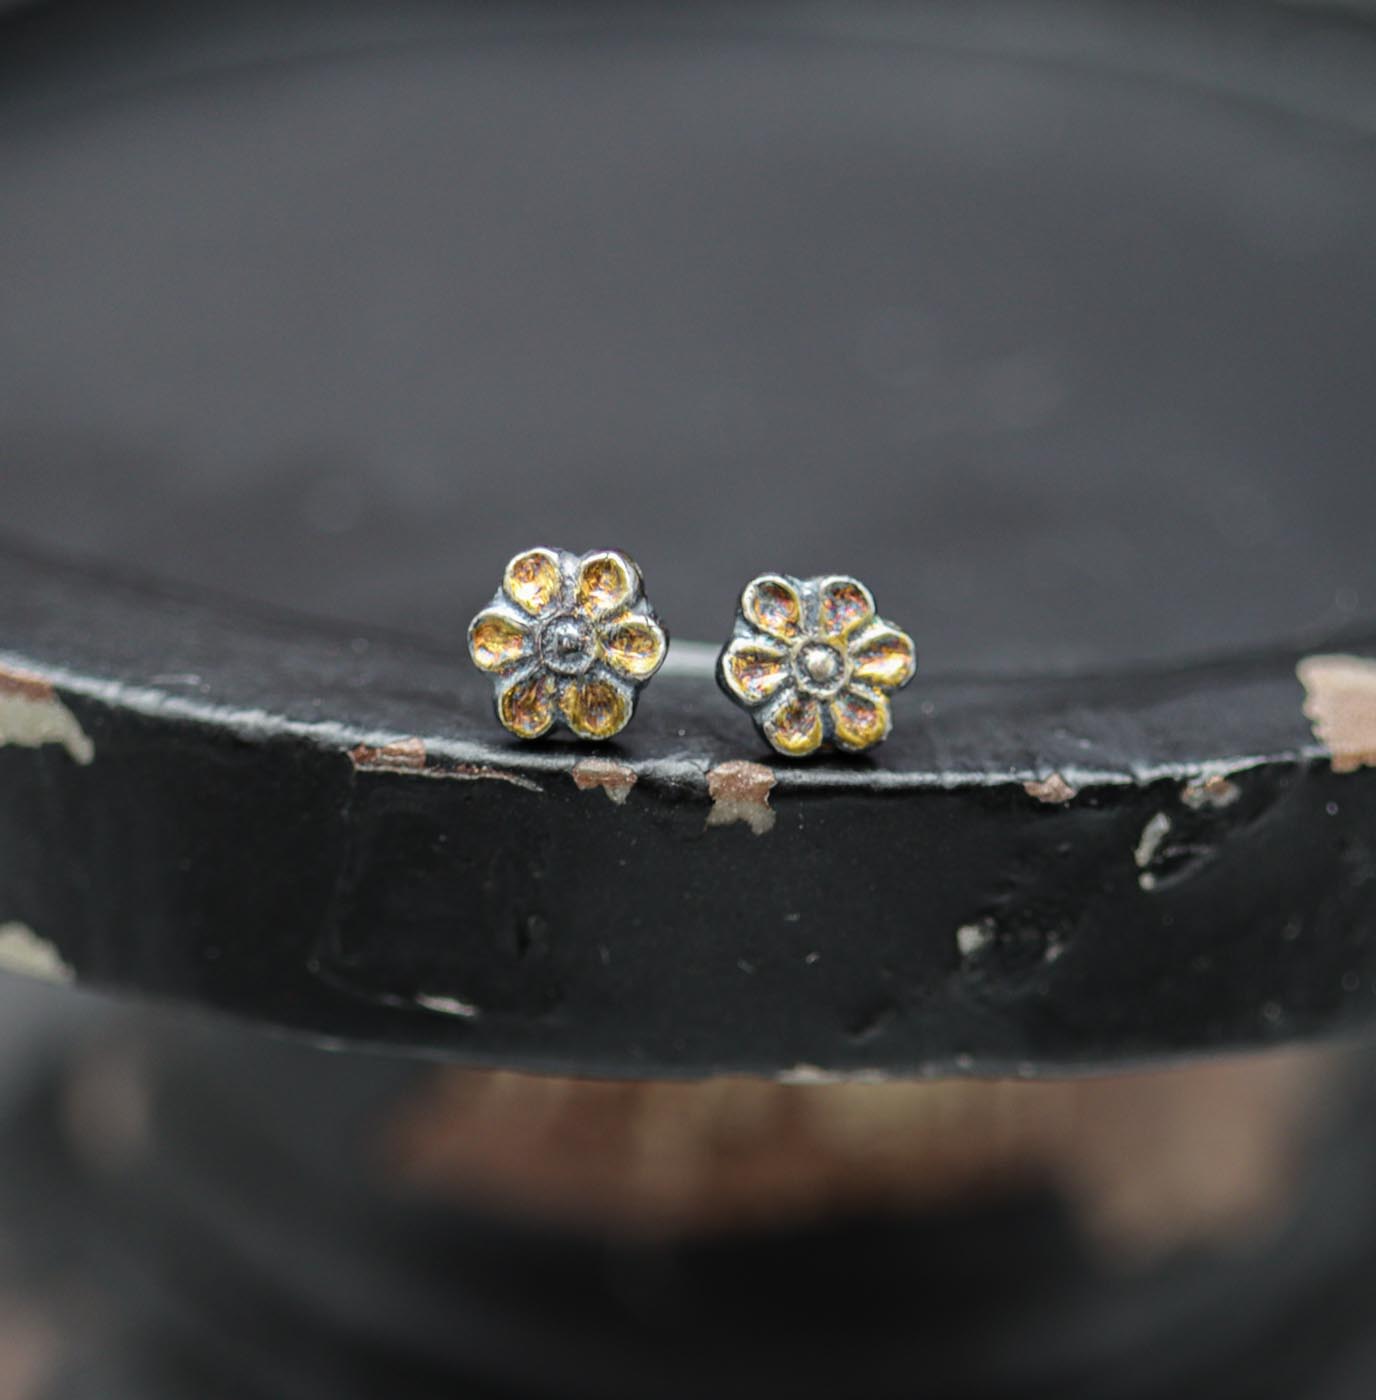 Flower Stud Earrings in Sterling Silver and 24k Gold